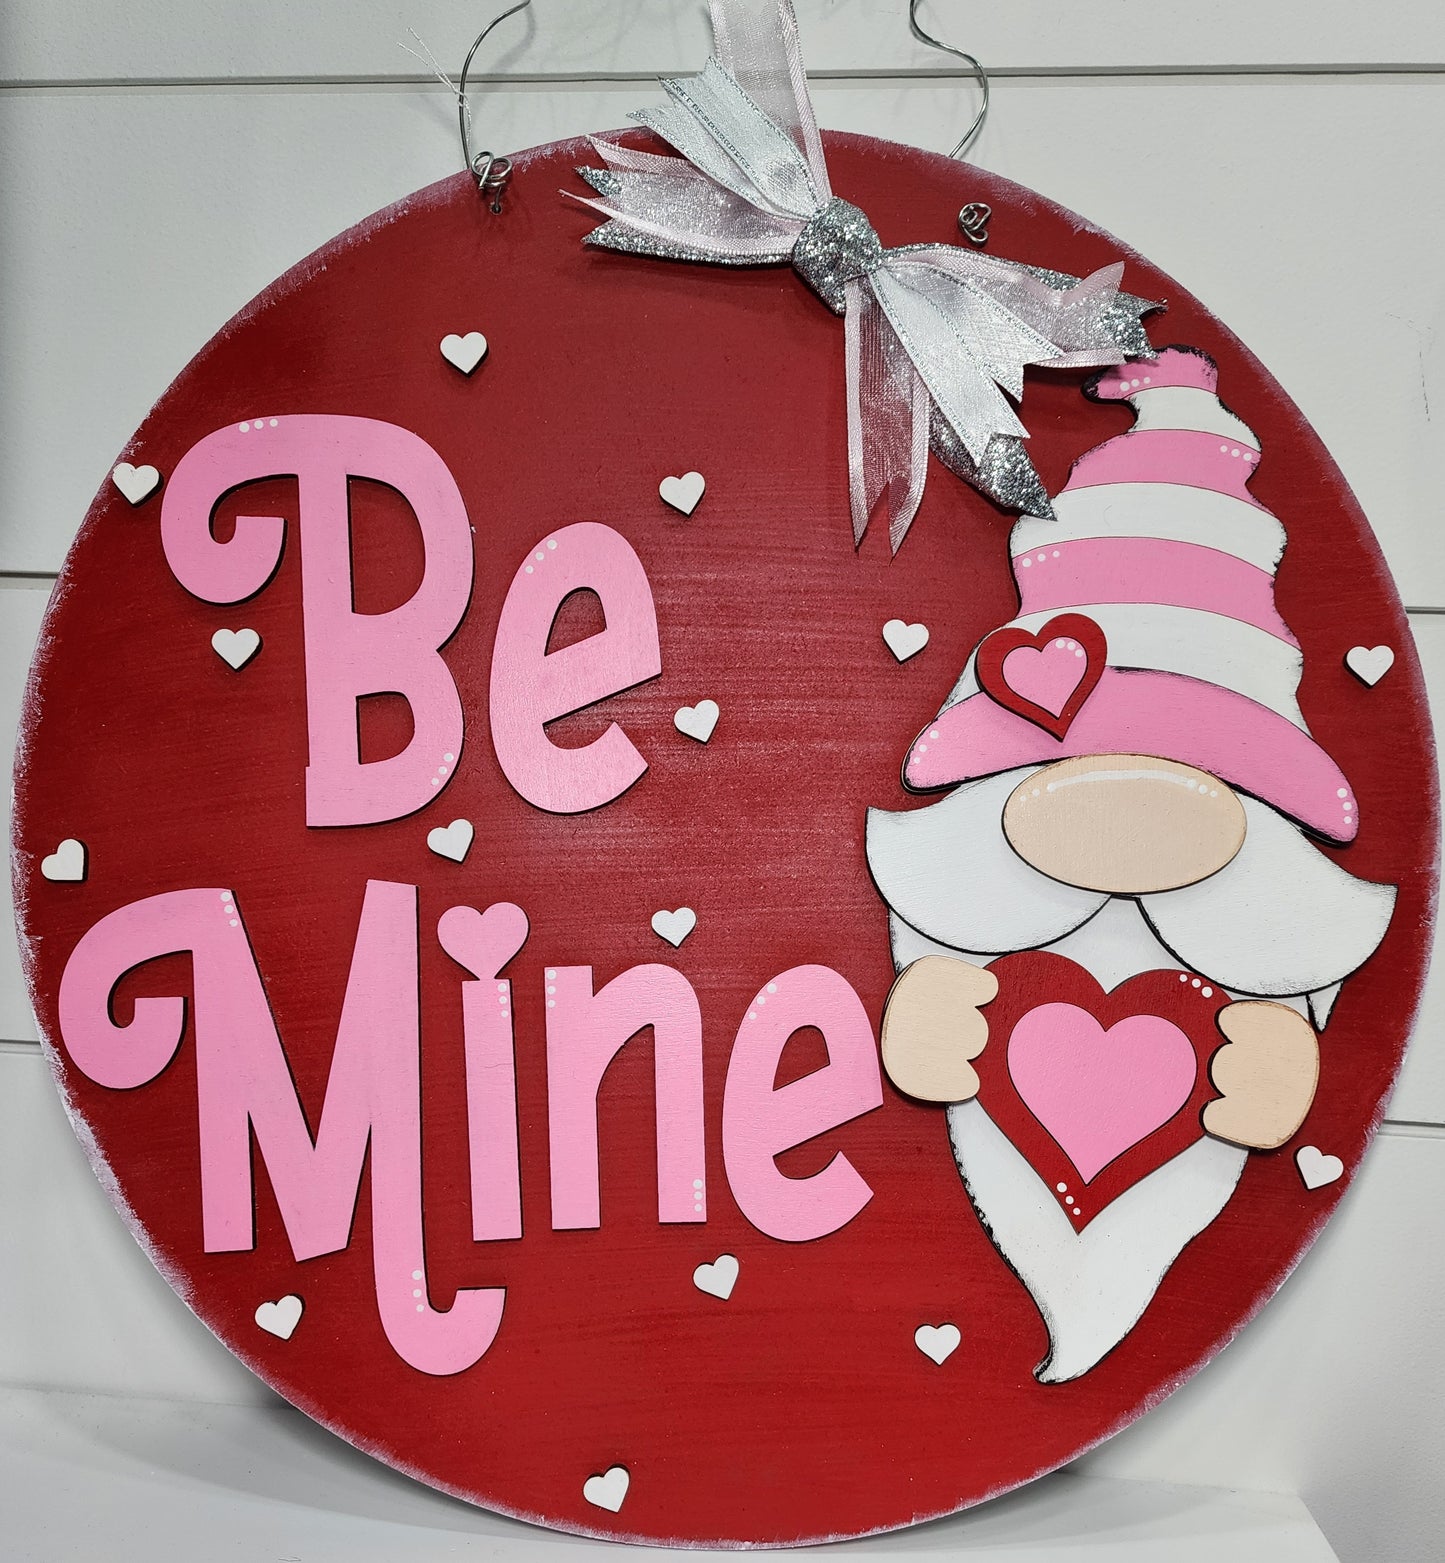 Be Mine . Valentine's Day